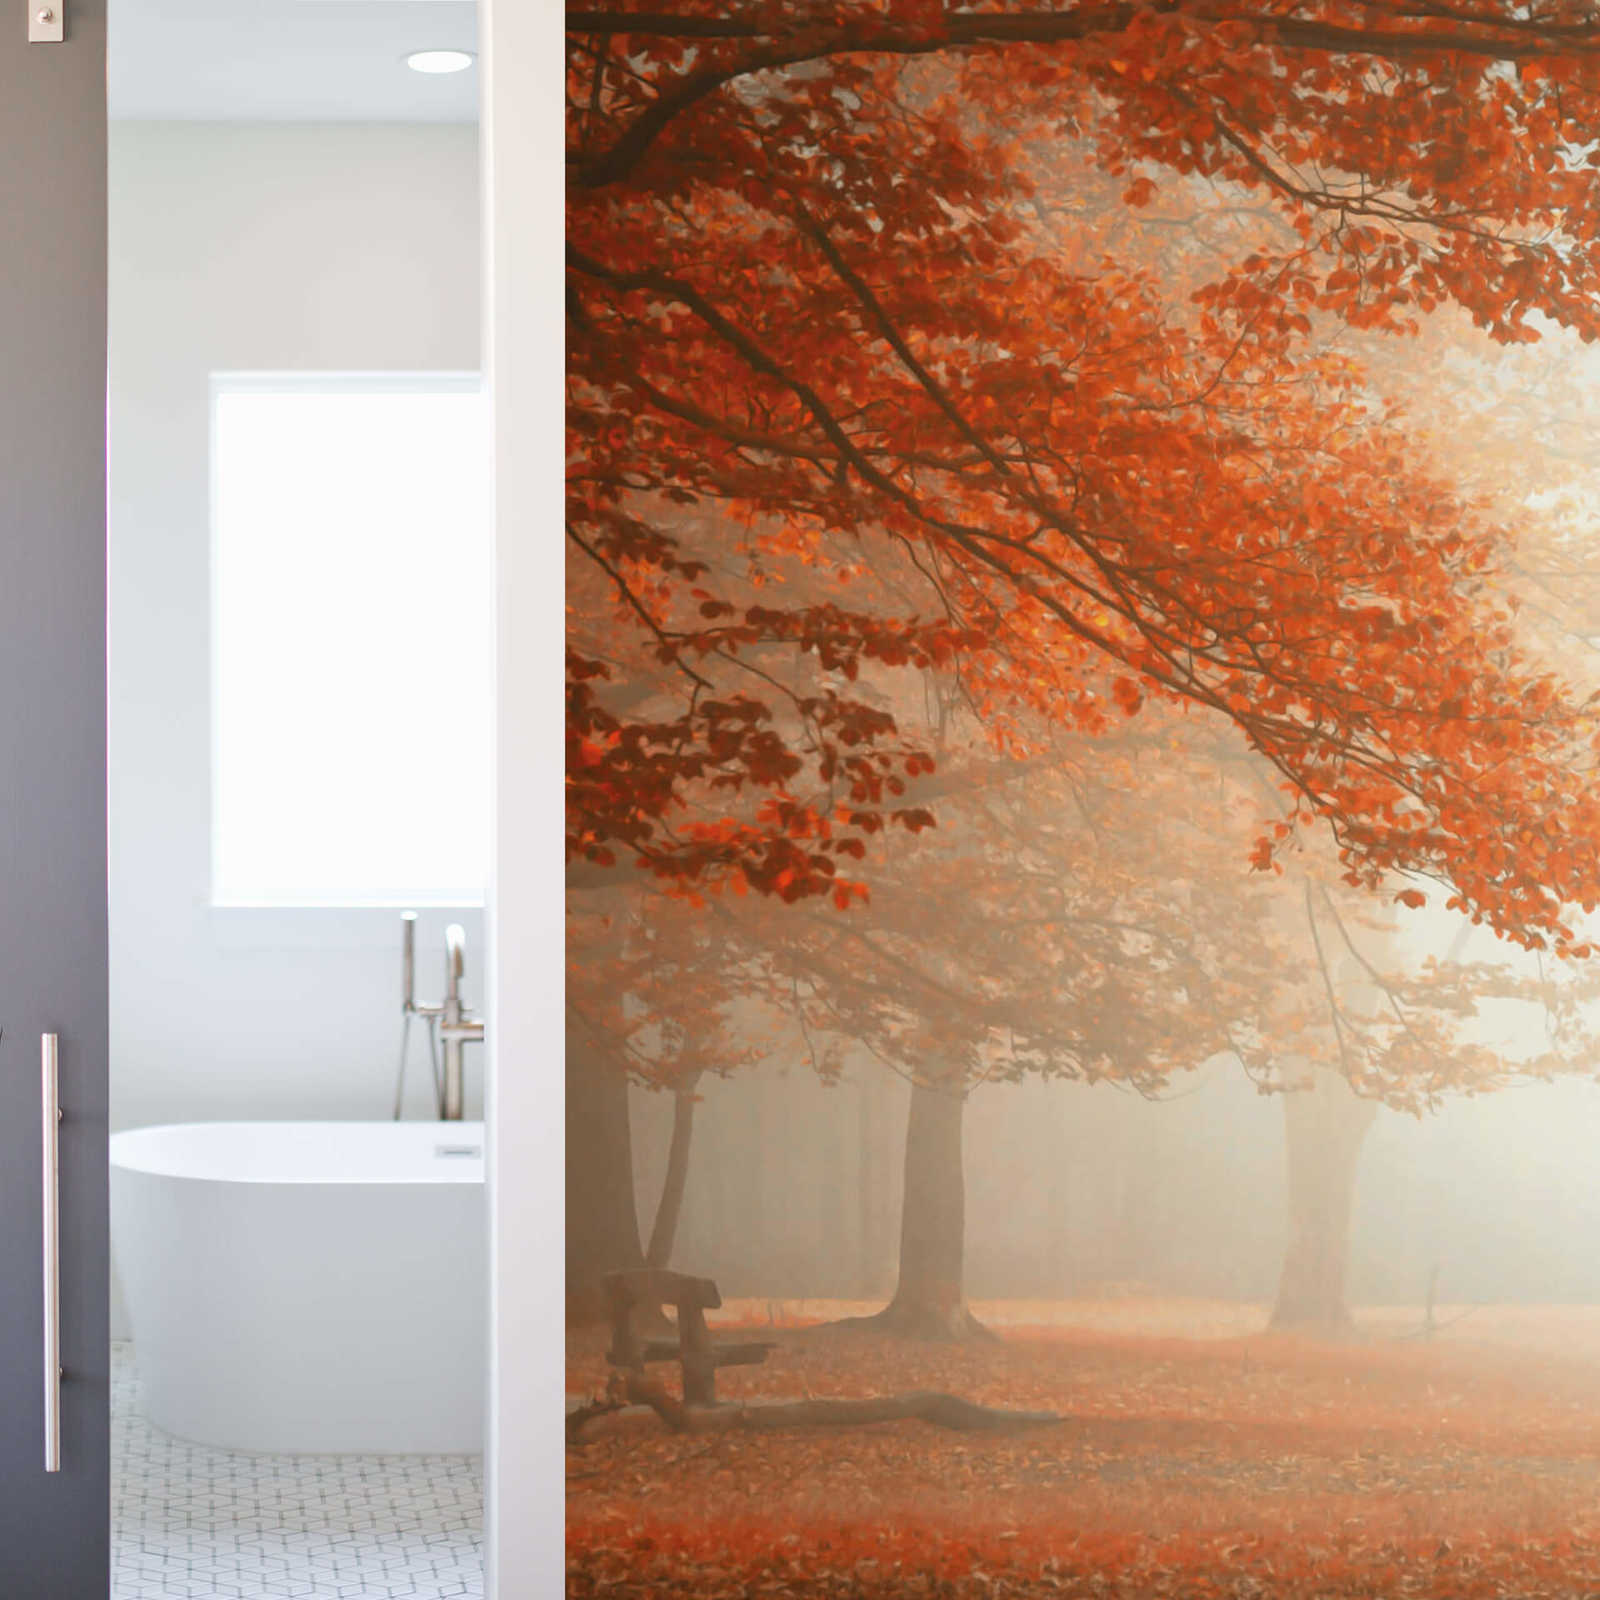             Photo wallpaper park in autumn with fog - orange, brown
        